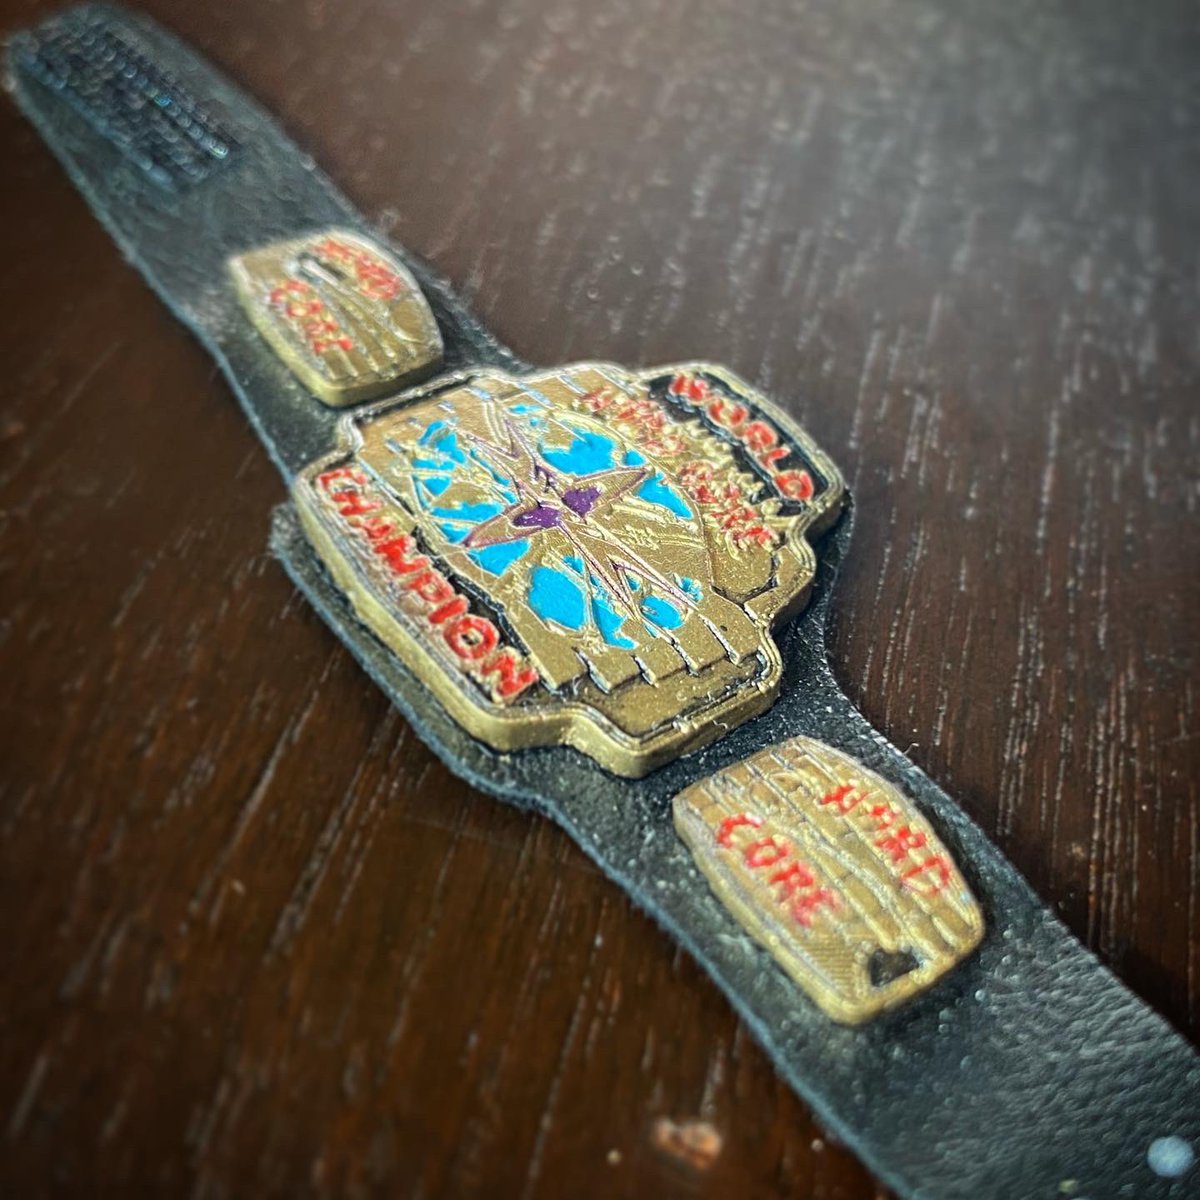 New custom WCW Hardcore Championship belt! #customtoys #championshipbelts